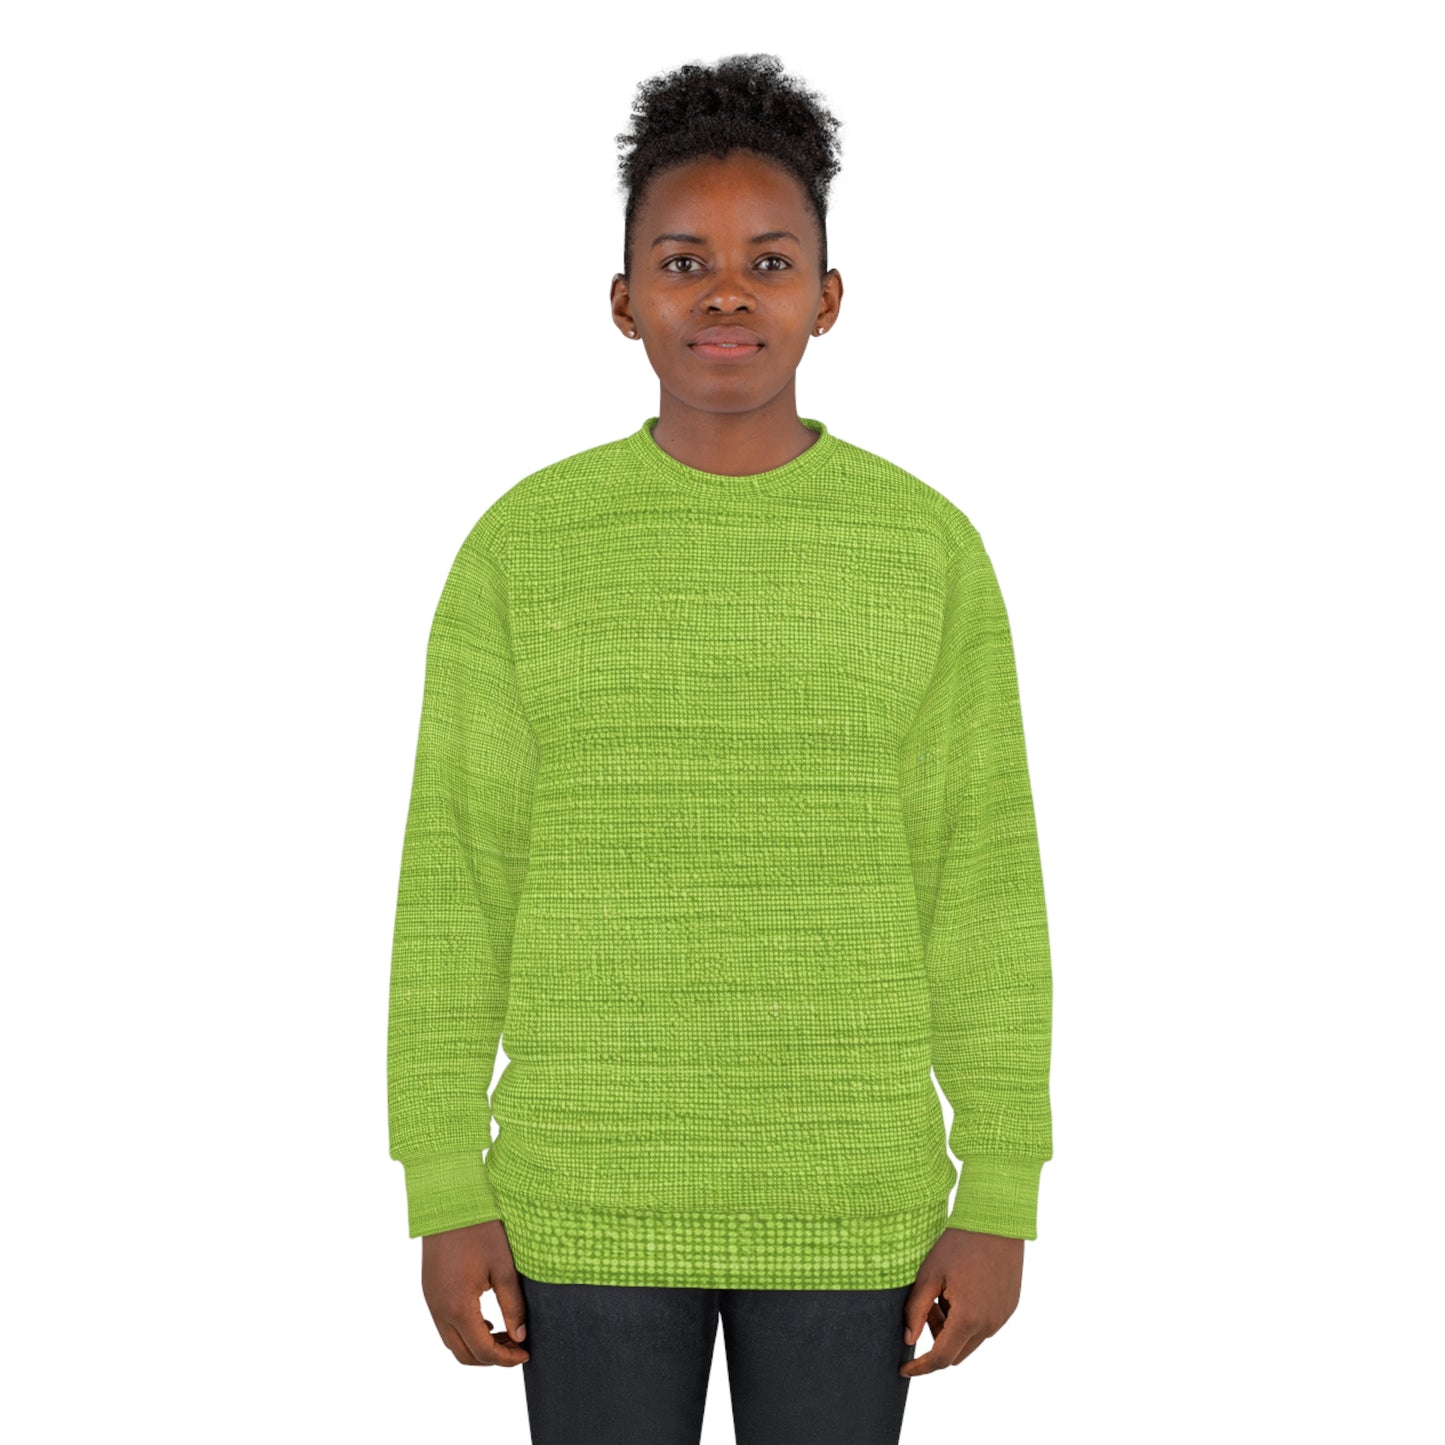 Lush Grass Neon Green: Denim-Inspired, Springtime Fabric Style - Unisex Sweatshirt (AOP)